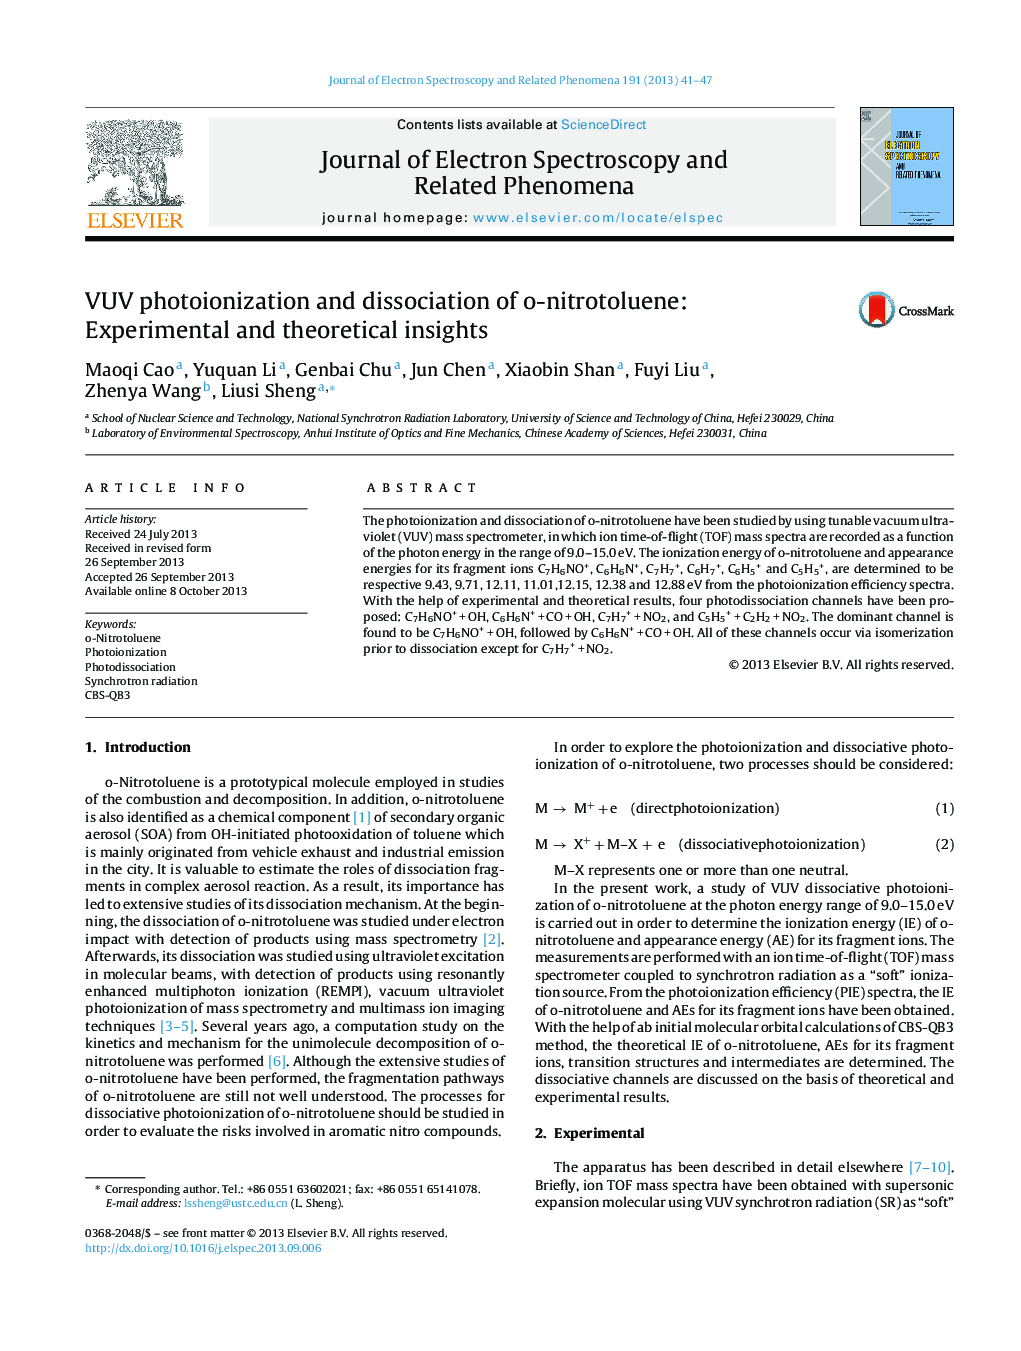 VUV photoionization and dissociation of o-nitrotoluene: Experimental and theoretical insights